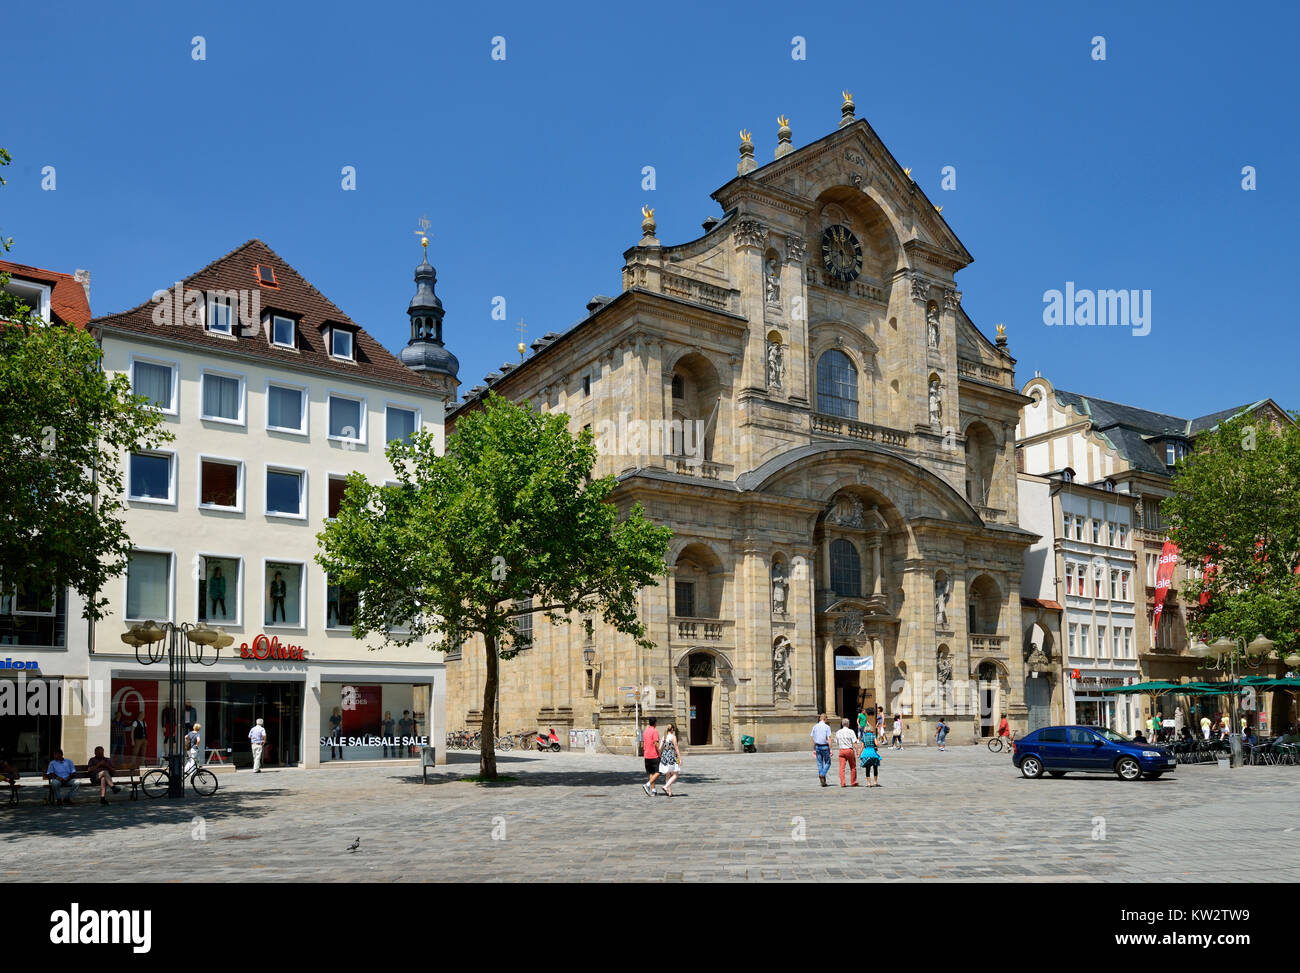 Mercato verde con la chiesa di Saint Martin a Bamberg, Bamberg, Gruener Markt mit Kirche St Martin in Bamberg Foto Stock